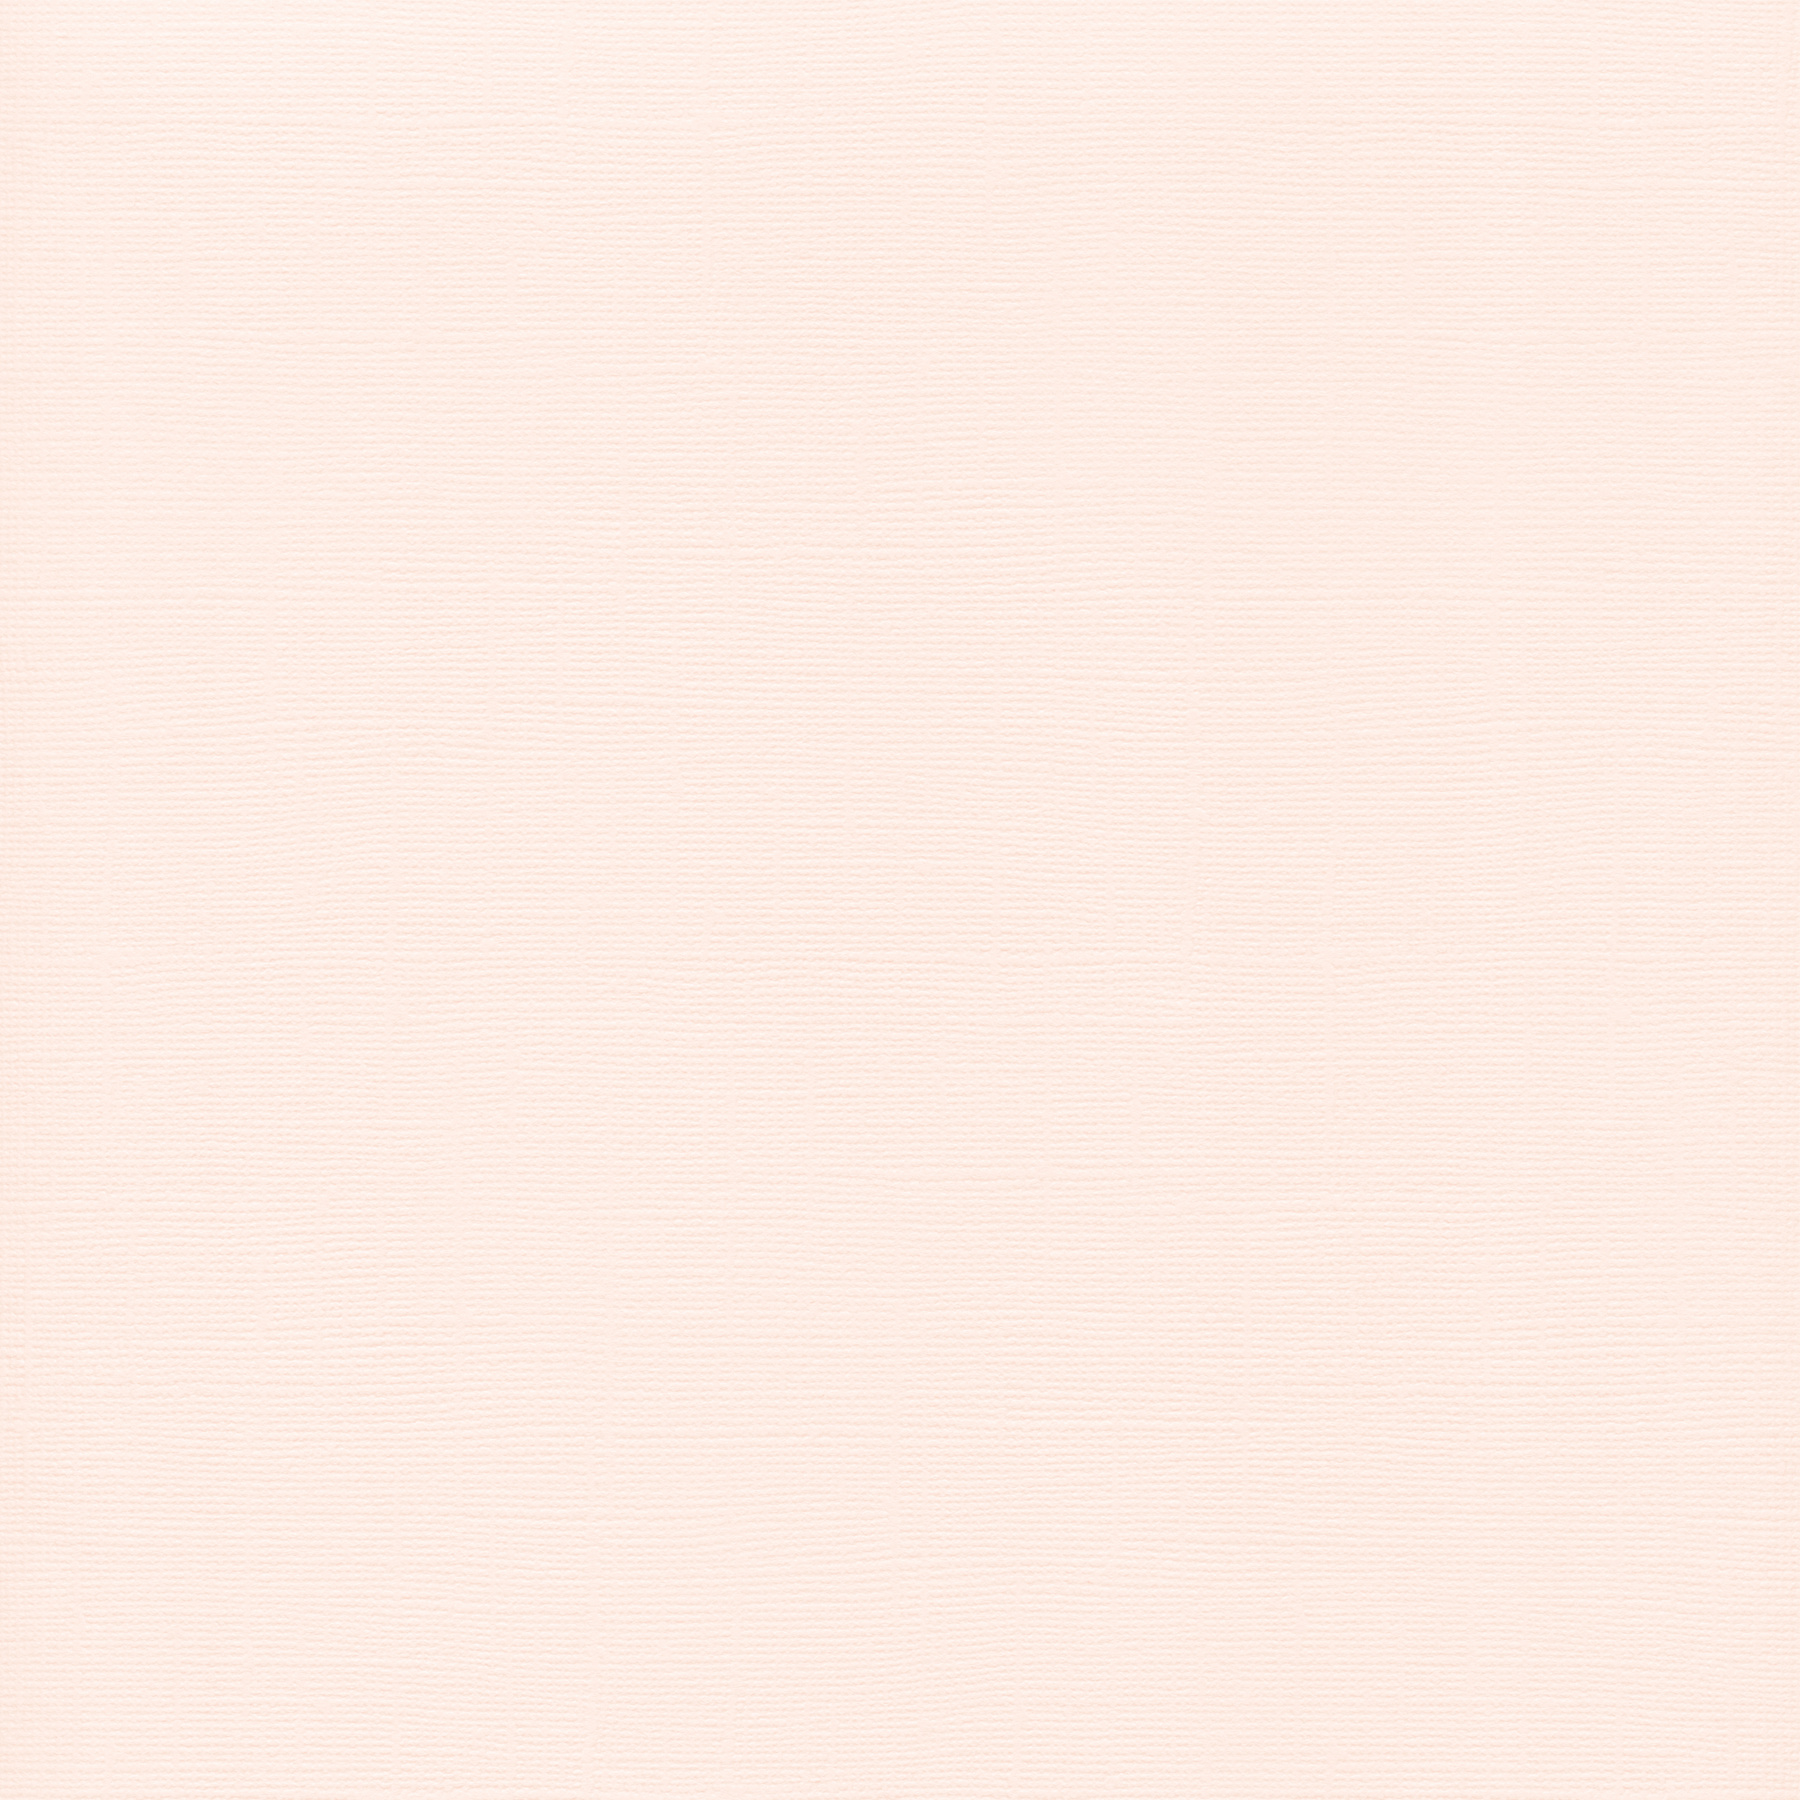 Blank Light Pink Paper Background